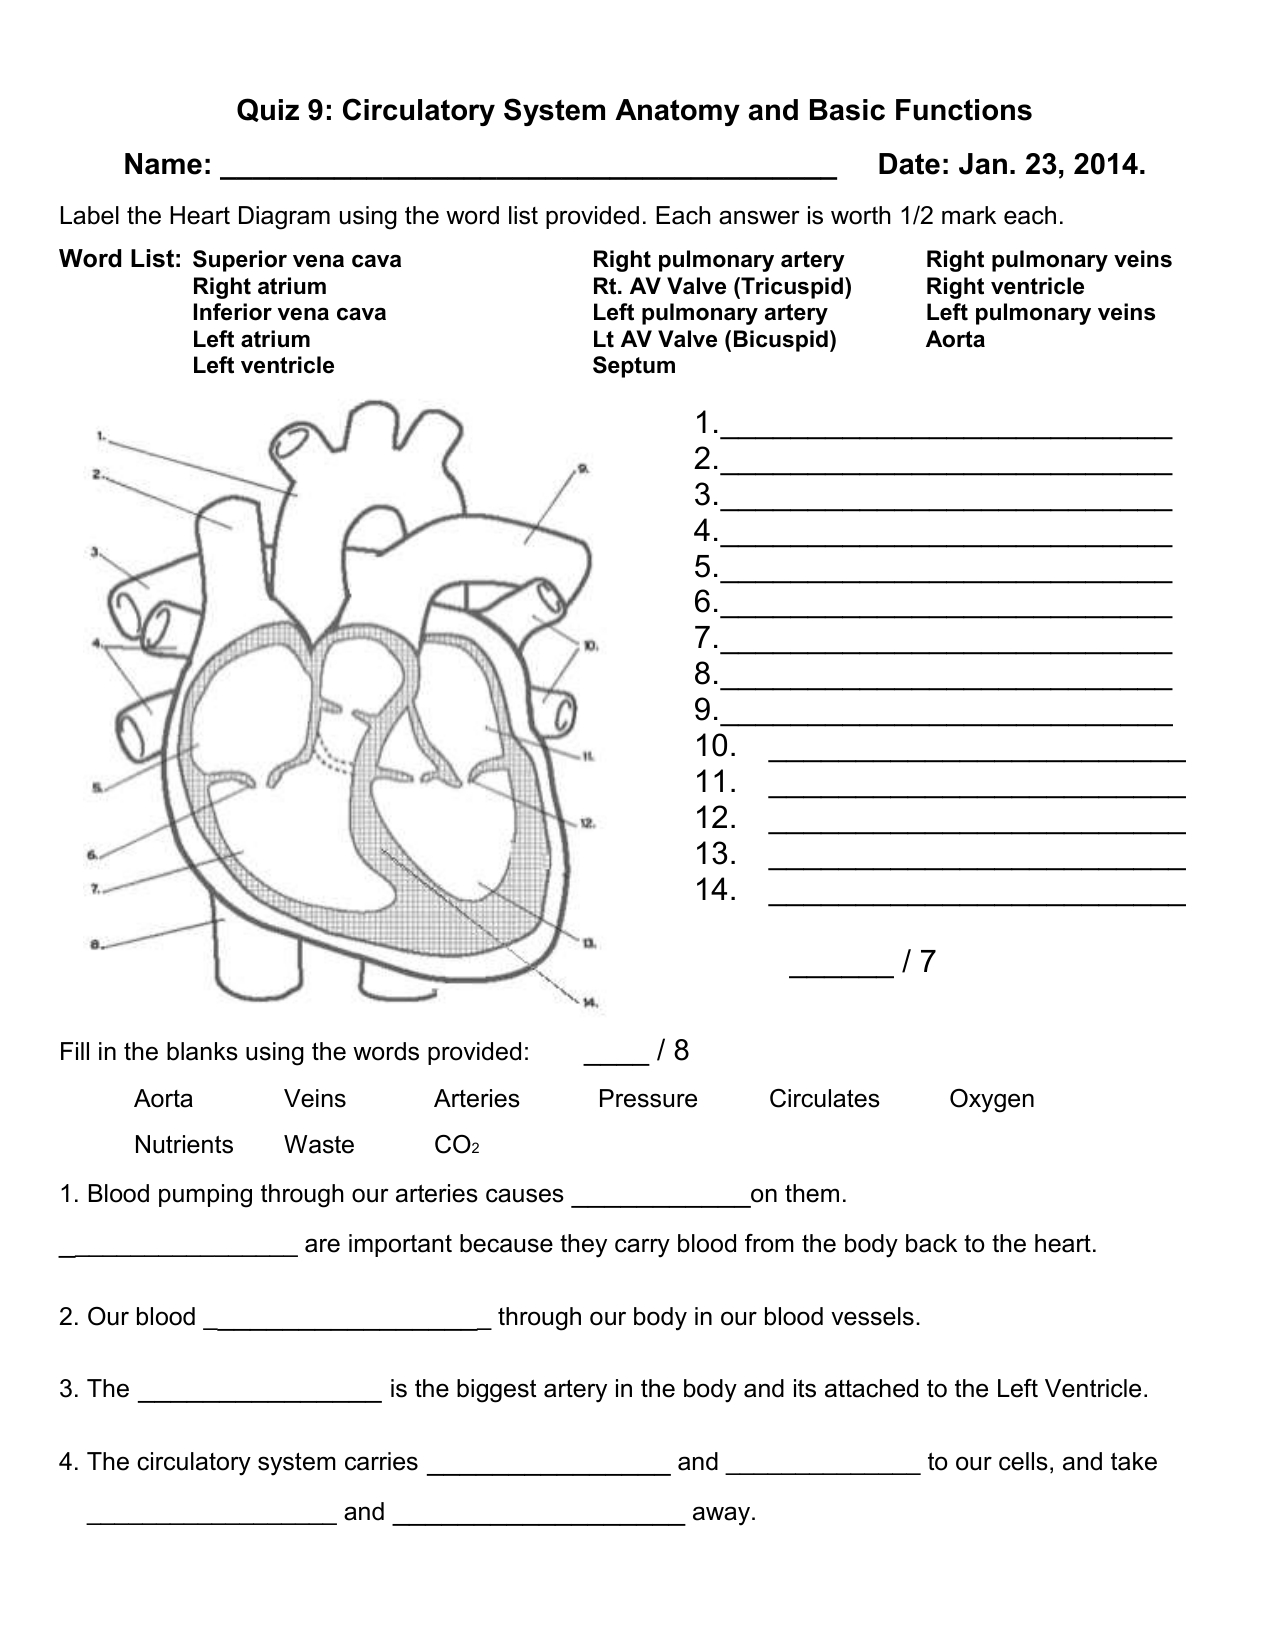 Quiz 9 Circulatory System Anatomy And Basic Functions — db-excel.com